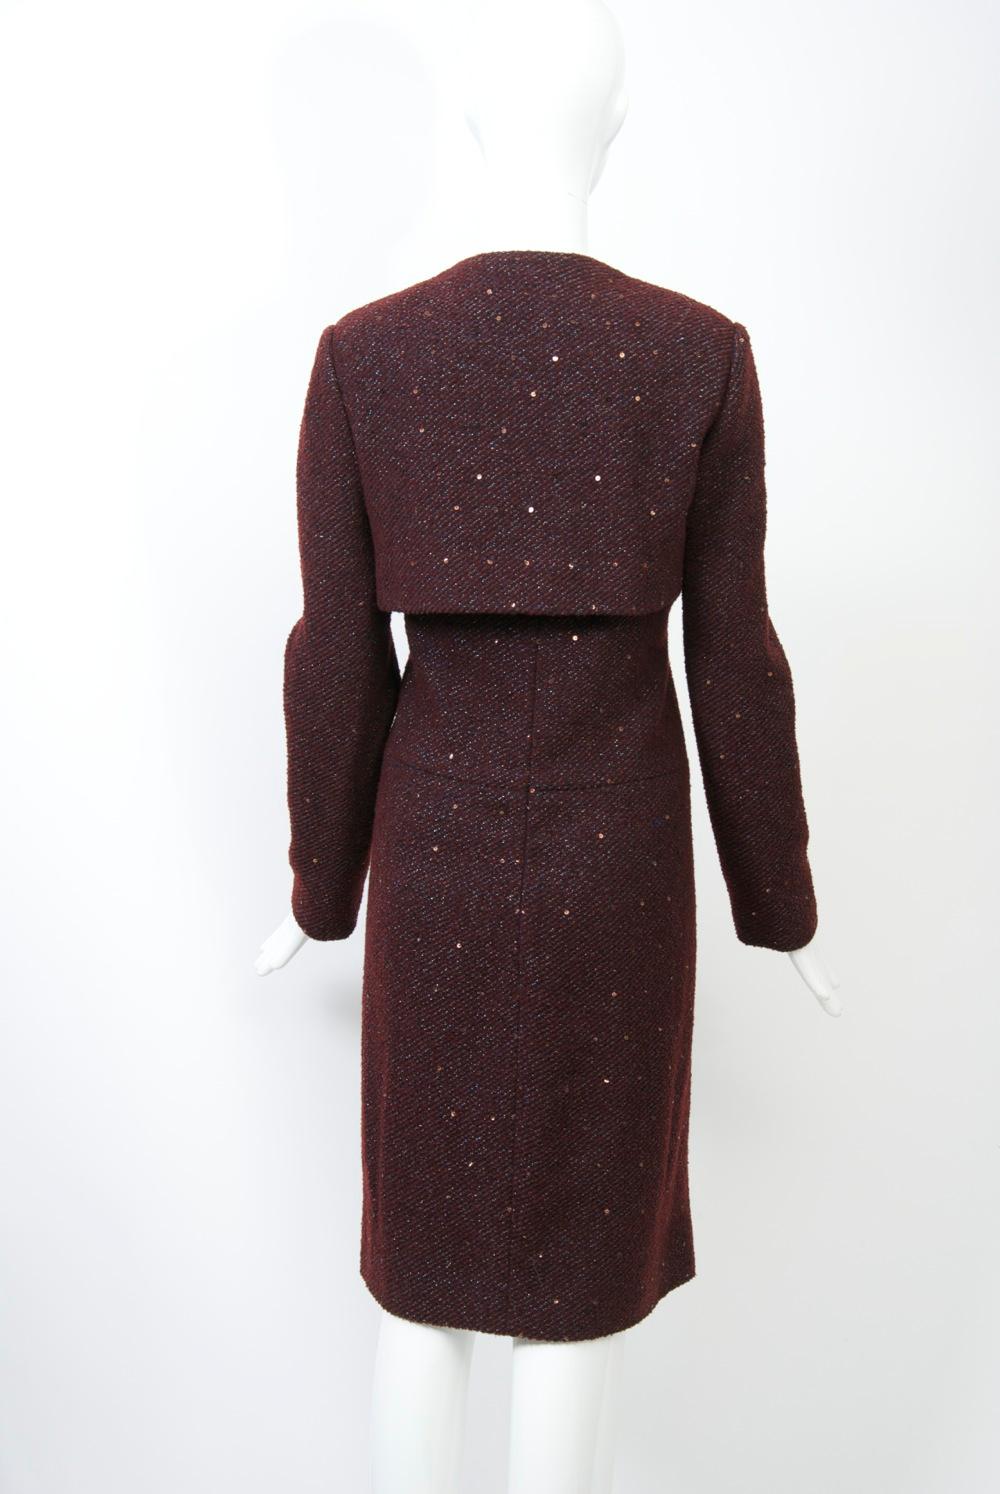 Women's Geoffrey Beene Burgundy/Metallic Dress and Jacket